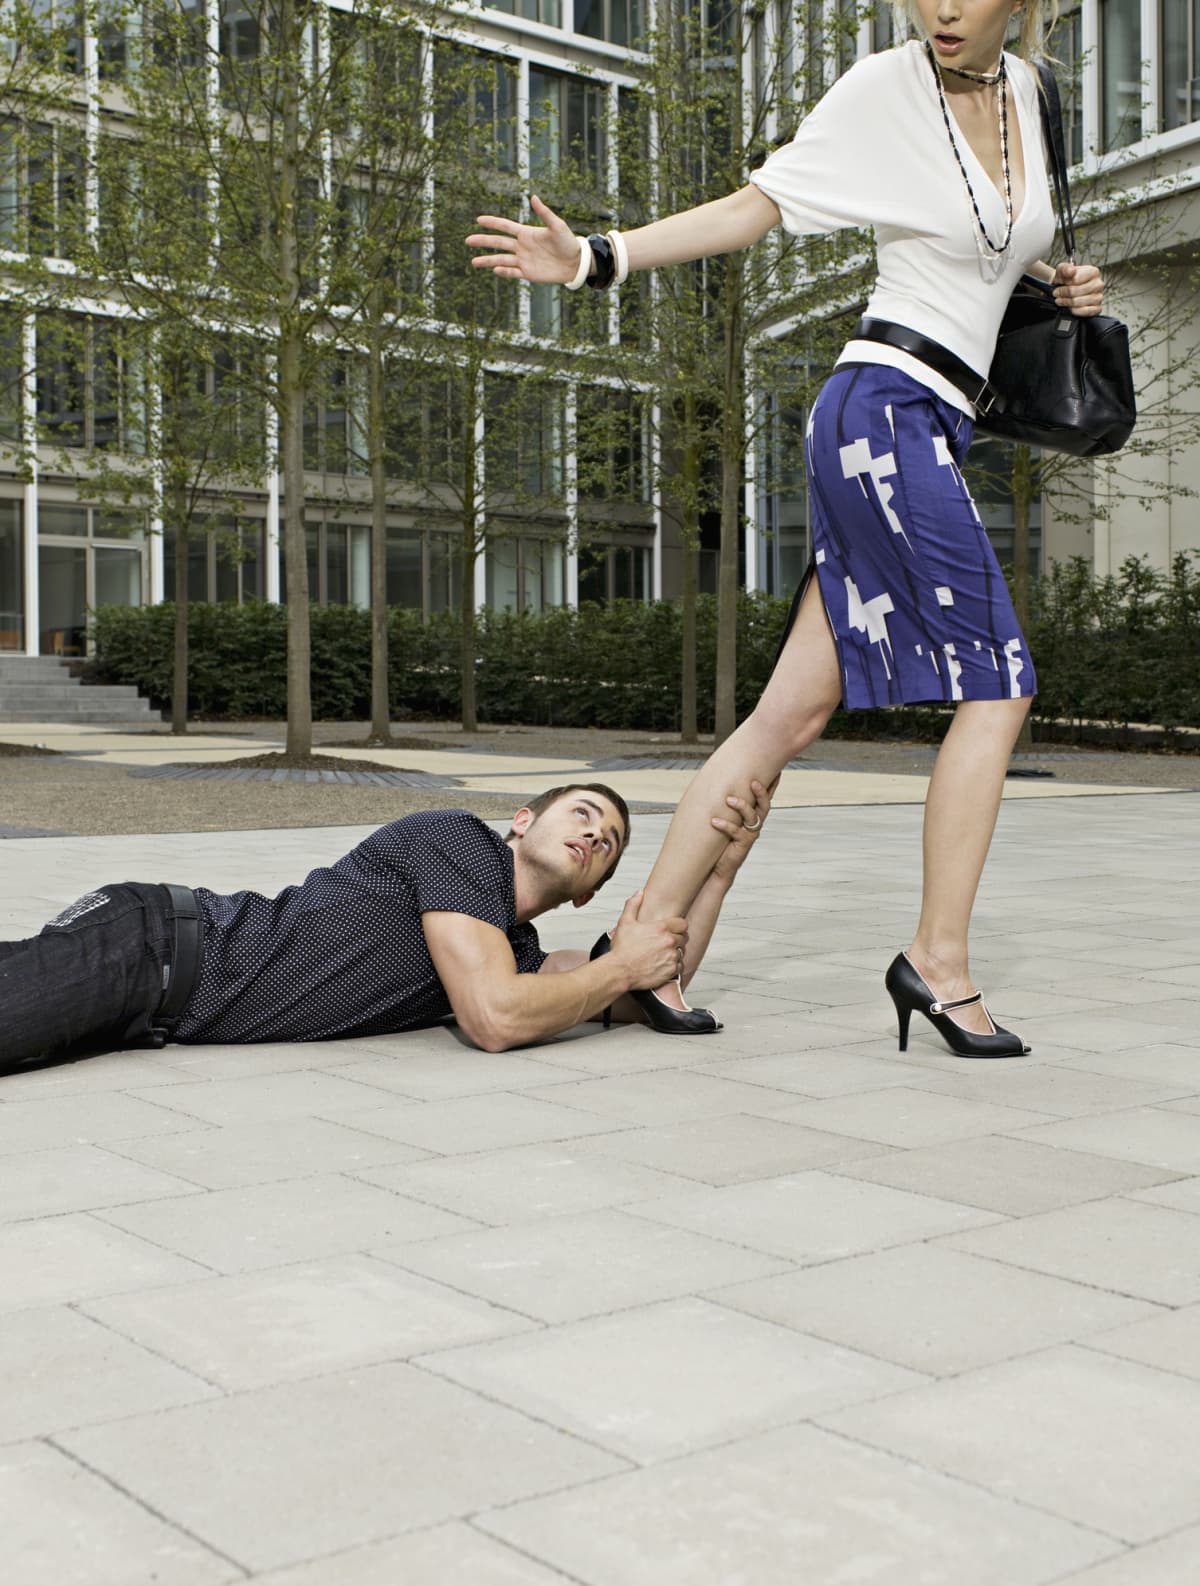 Man grabbing woman's leg as she tries to walk away